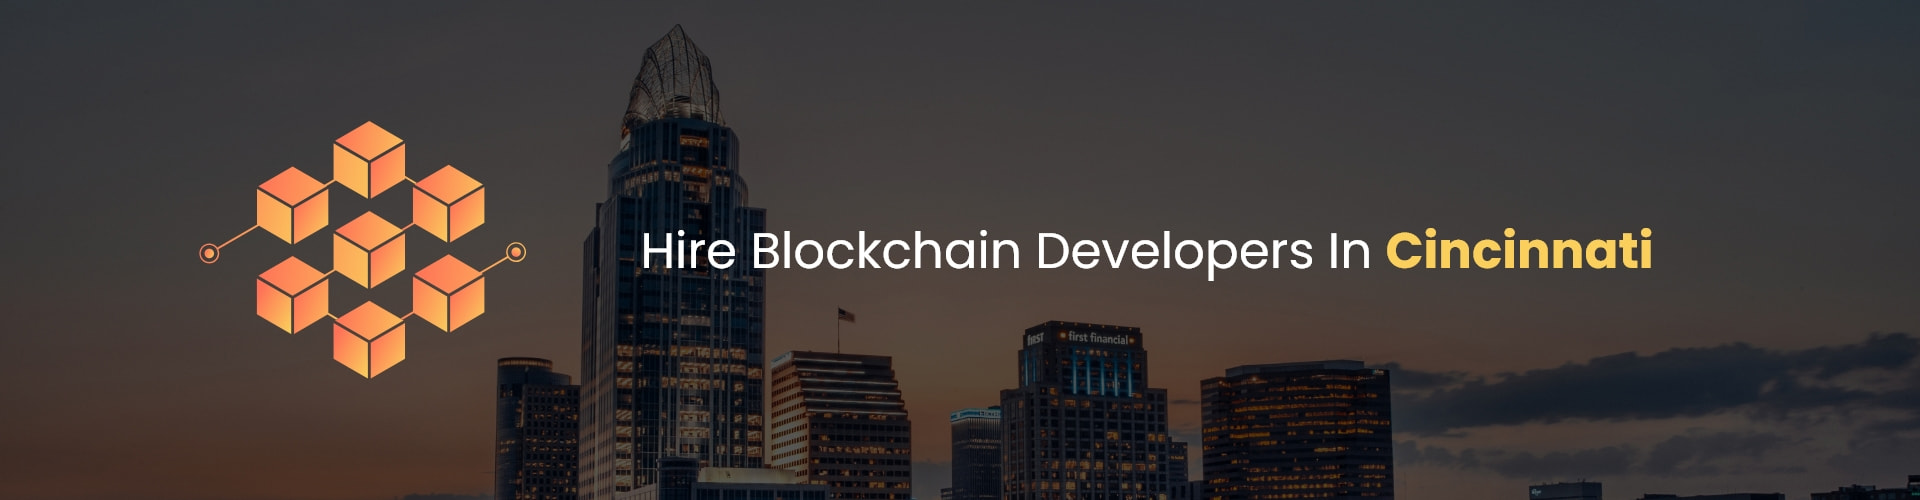 hire blockchain developers in cincinnati